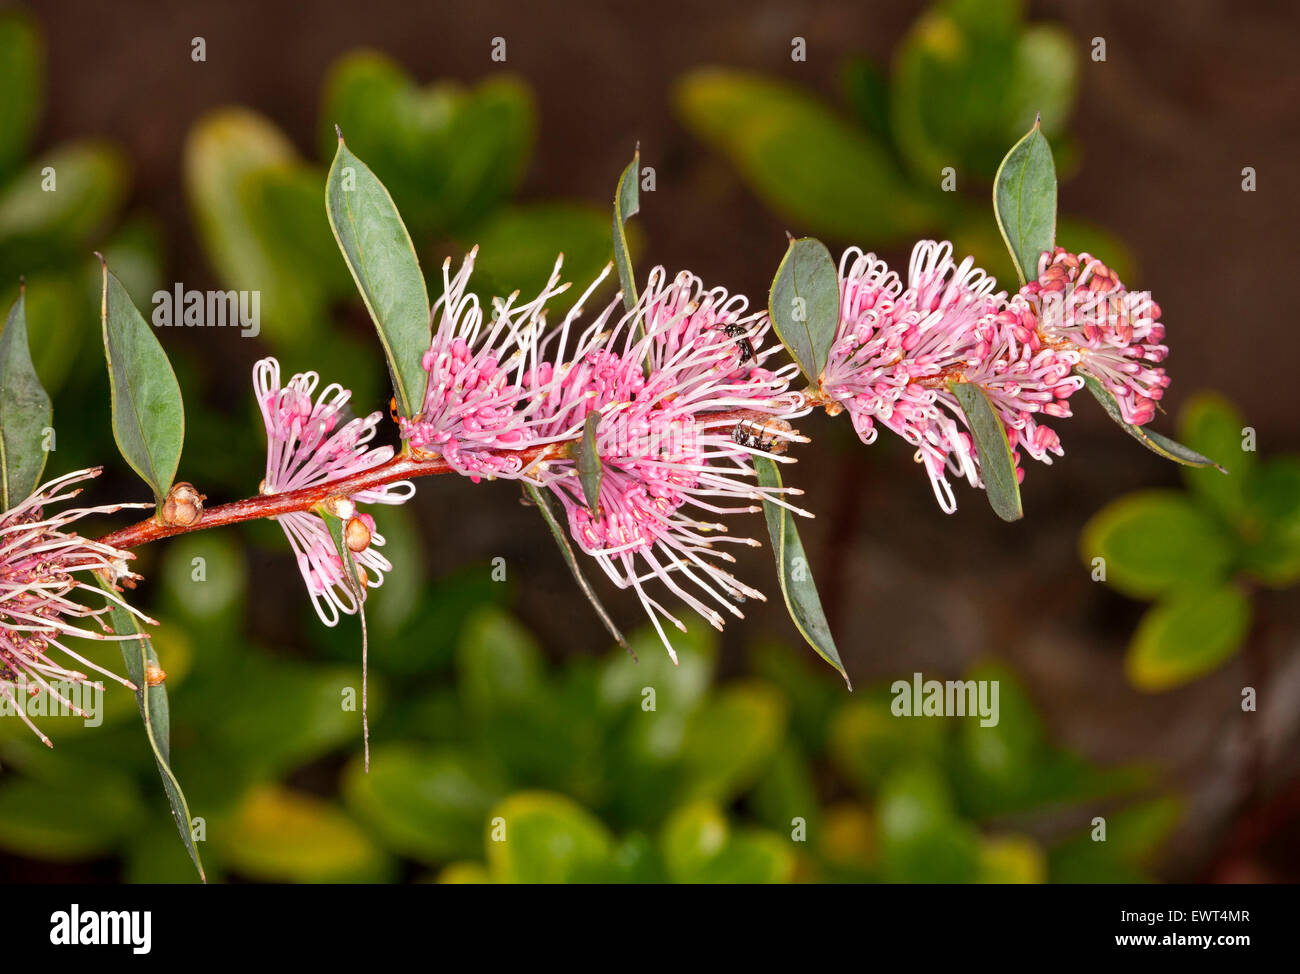 Stunning & unusual pink flowers & green leaves of Hakea cultivar 'Burrendong Beauty', Australian native plant on dark background Stock Photo